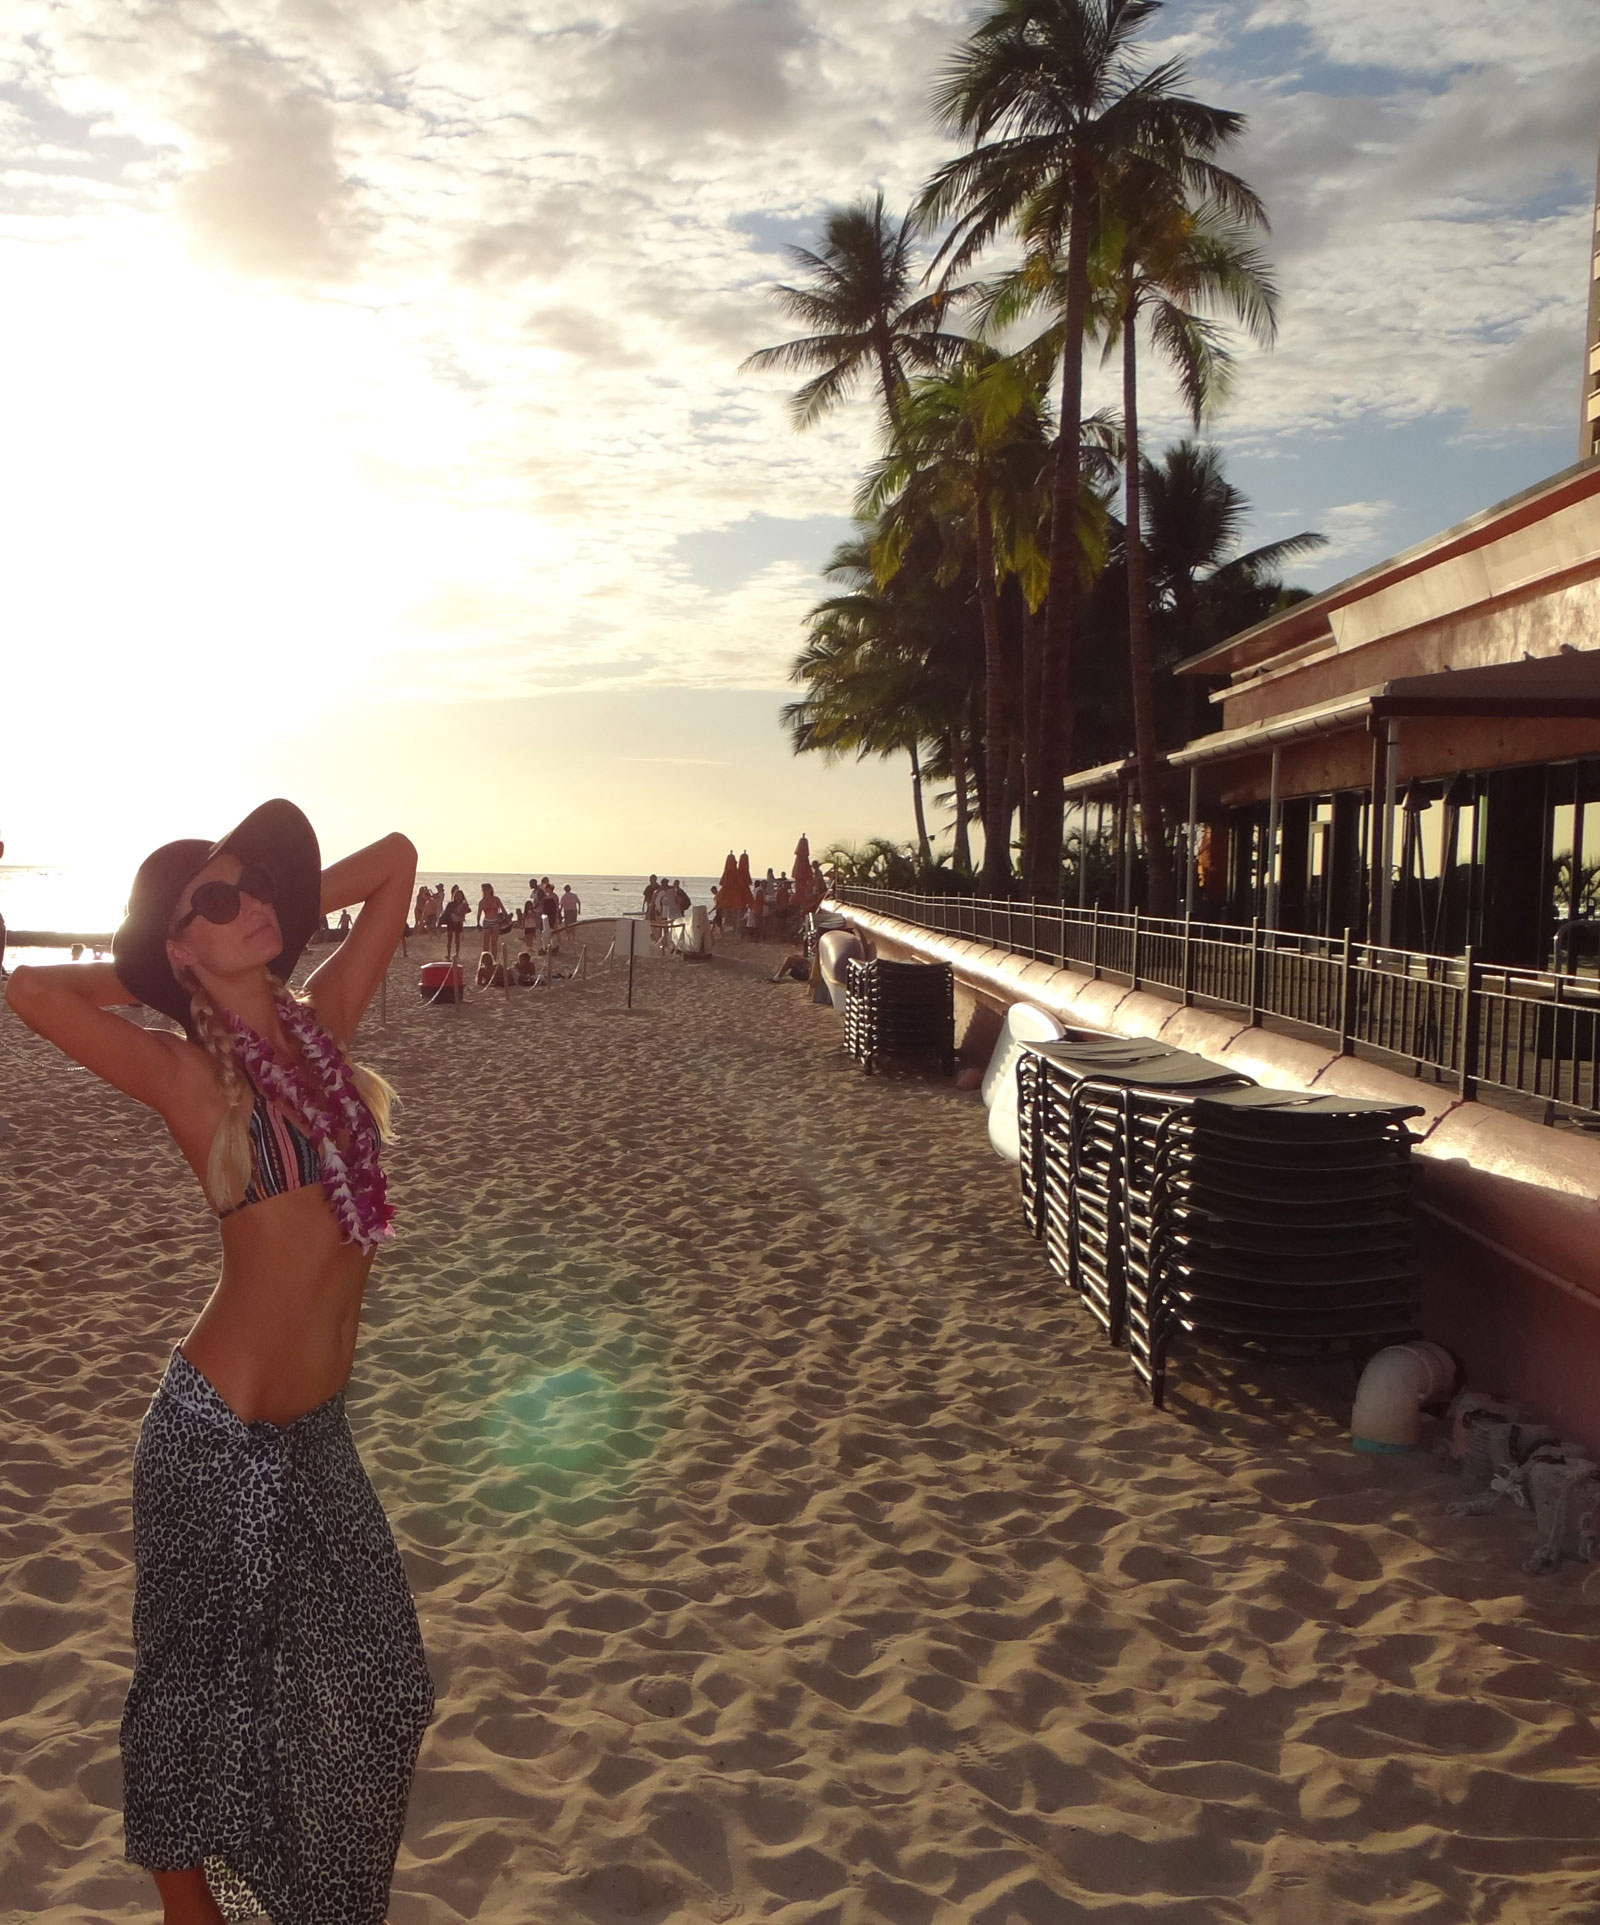 Paris Hilton in Bikini at Calendar Photoshoot in Hawaii - HawtCelebs